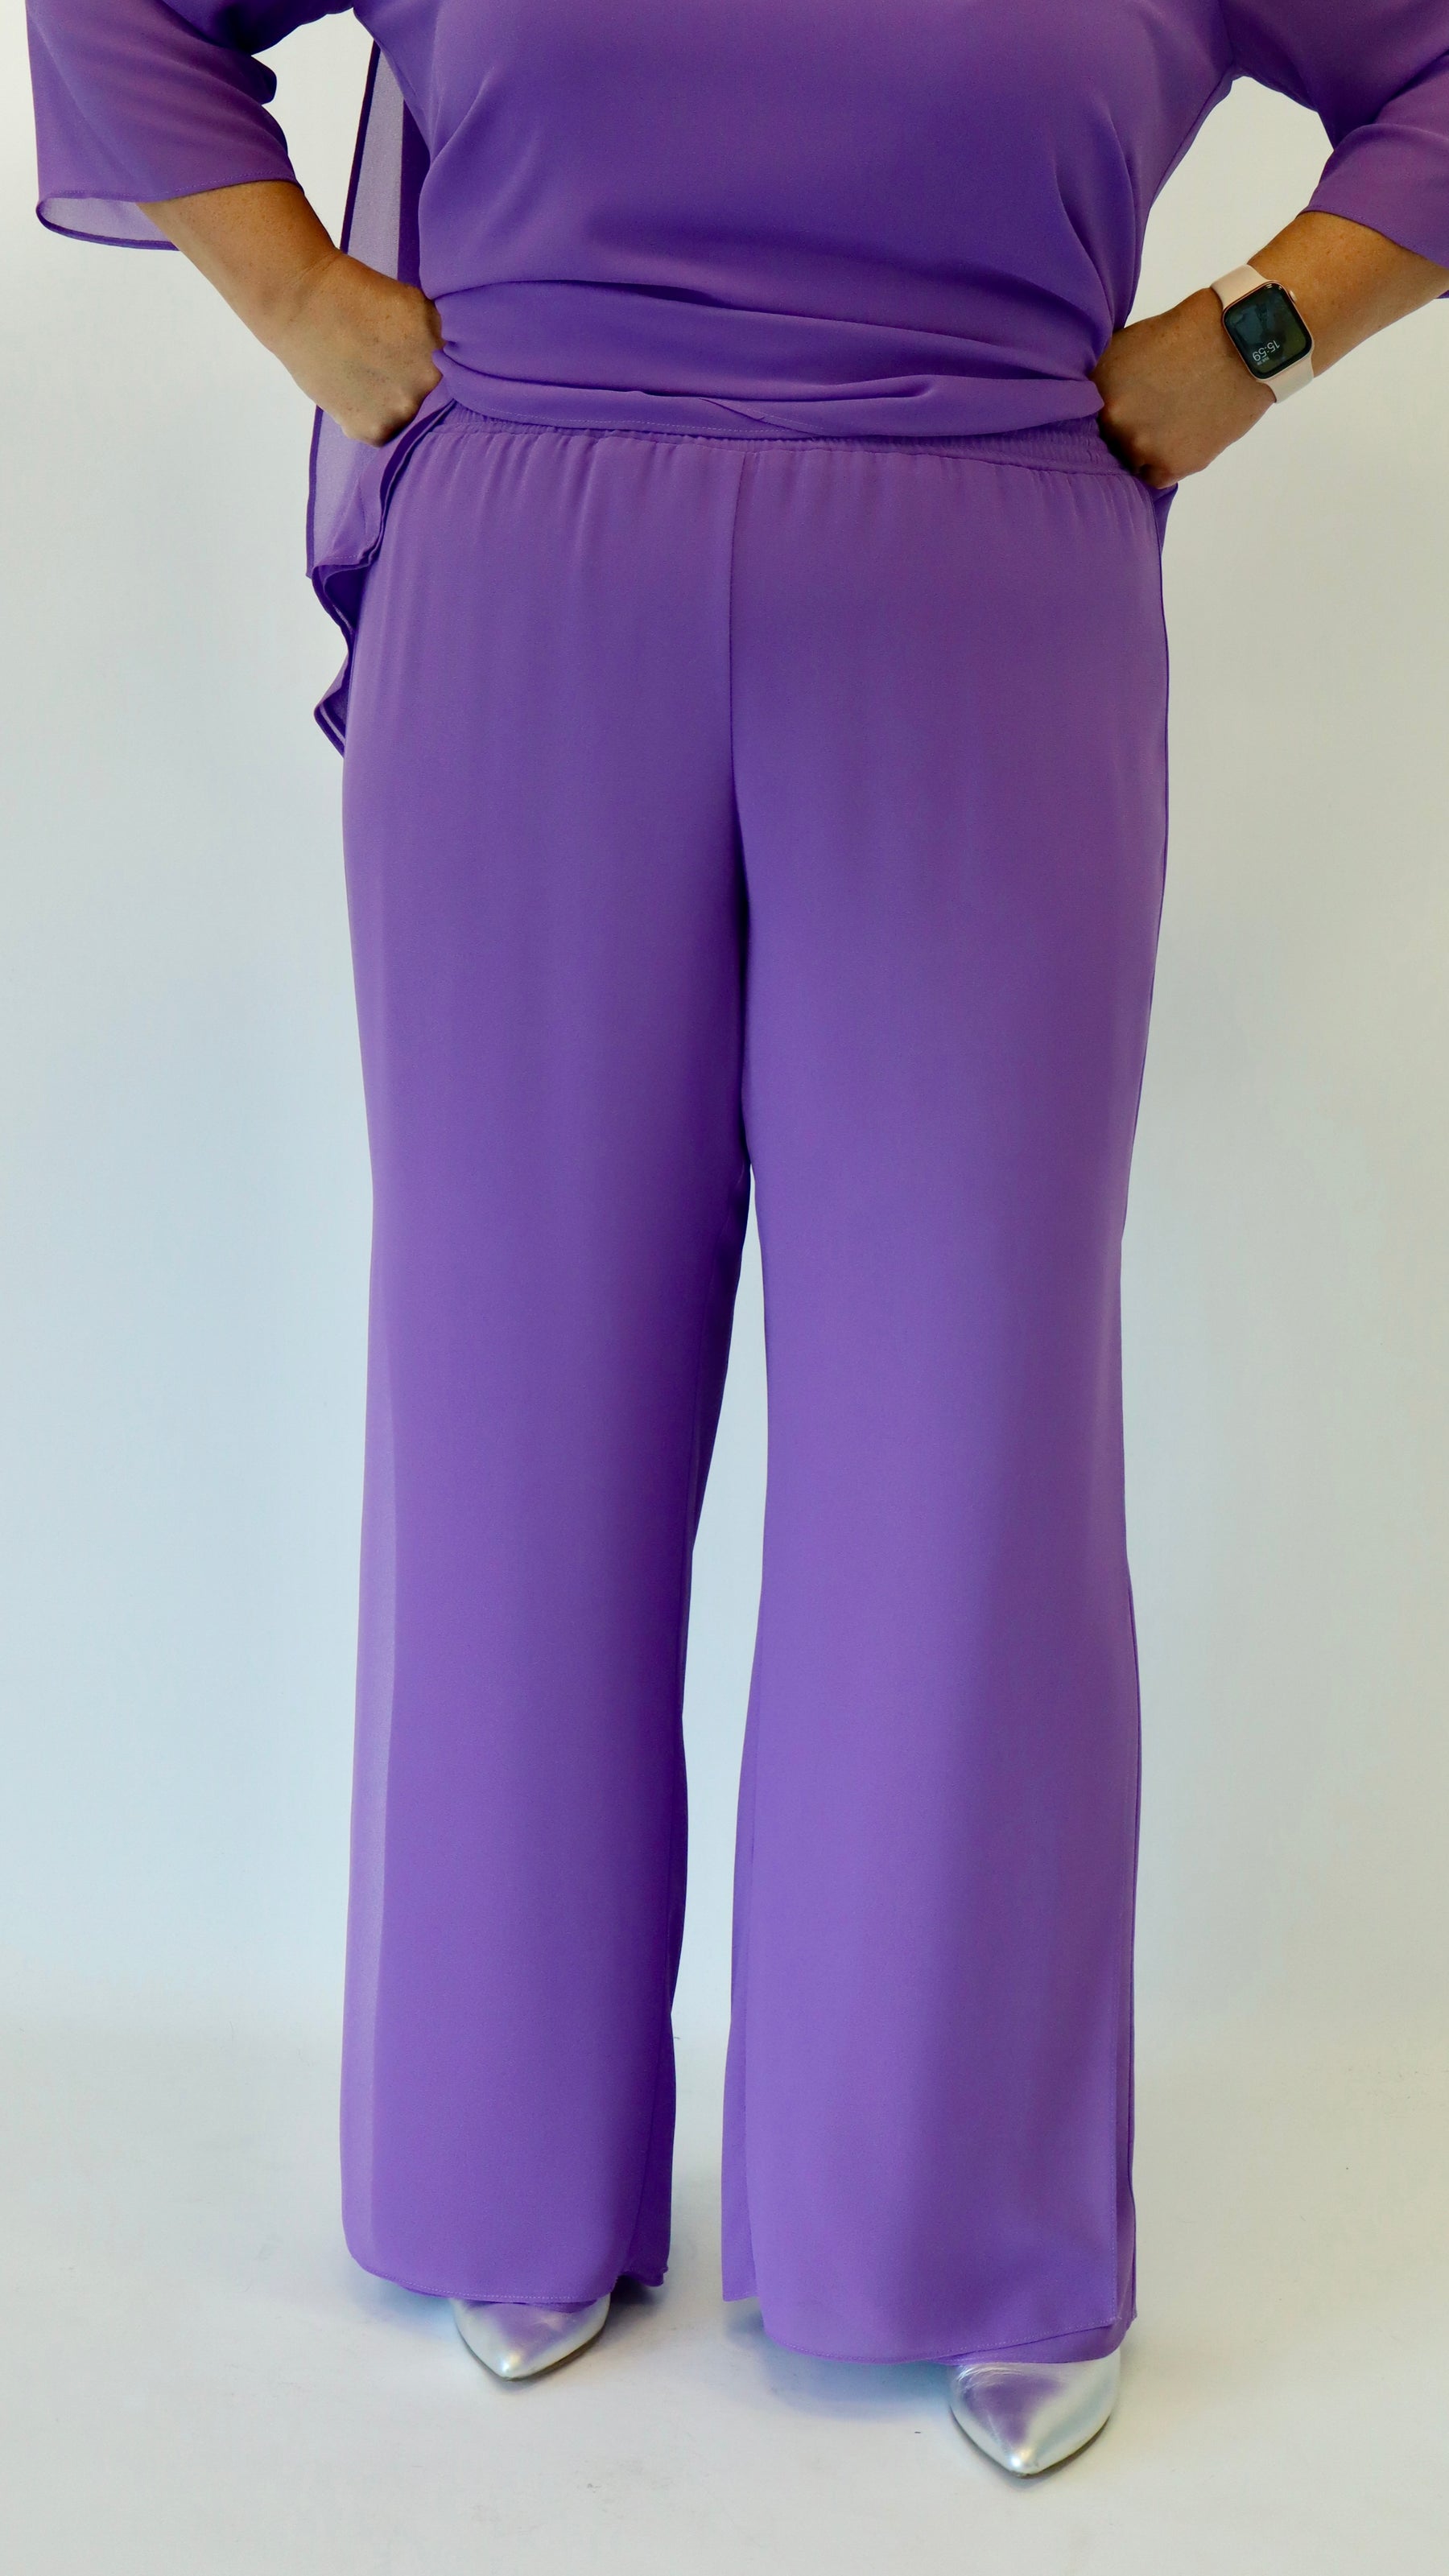 Godske Chiffon Elasticated Purple Trousers